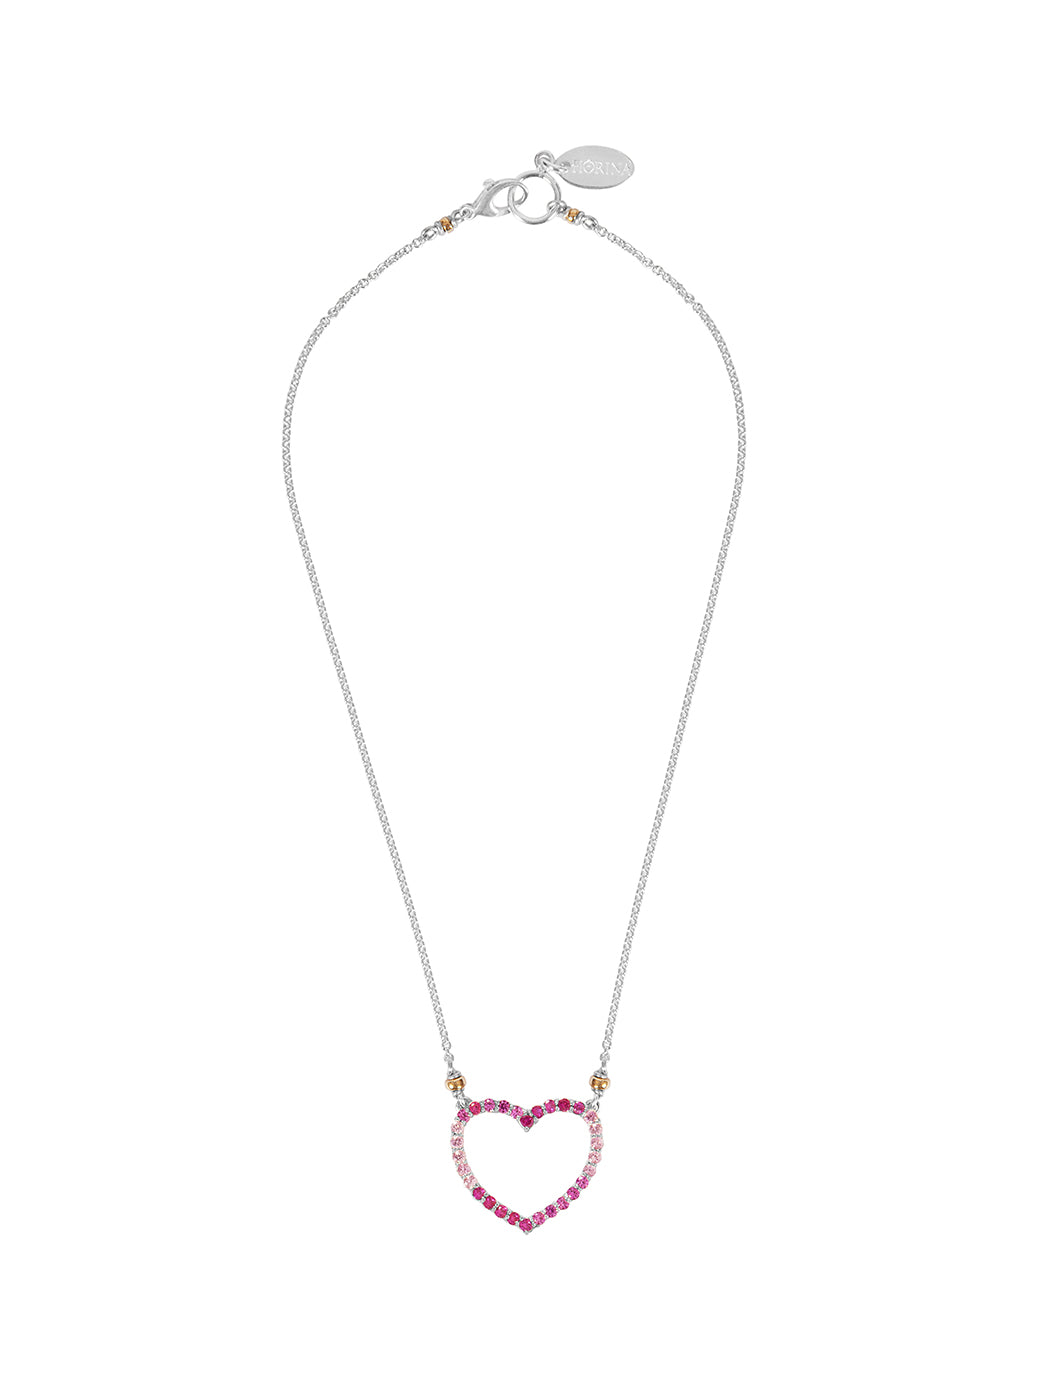 Fiorina Jewellery Heart Love Necklace Pink